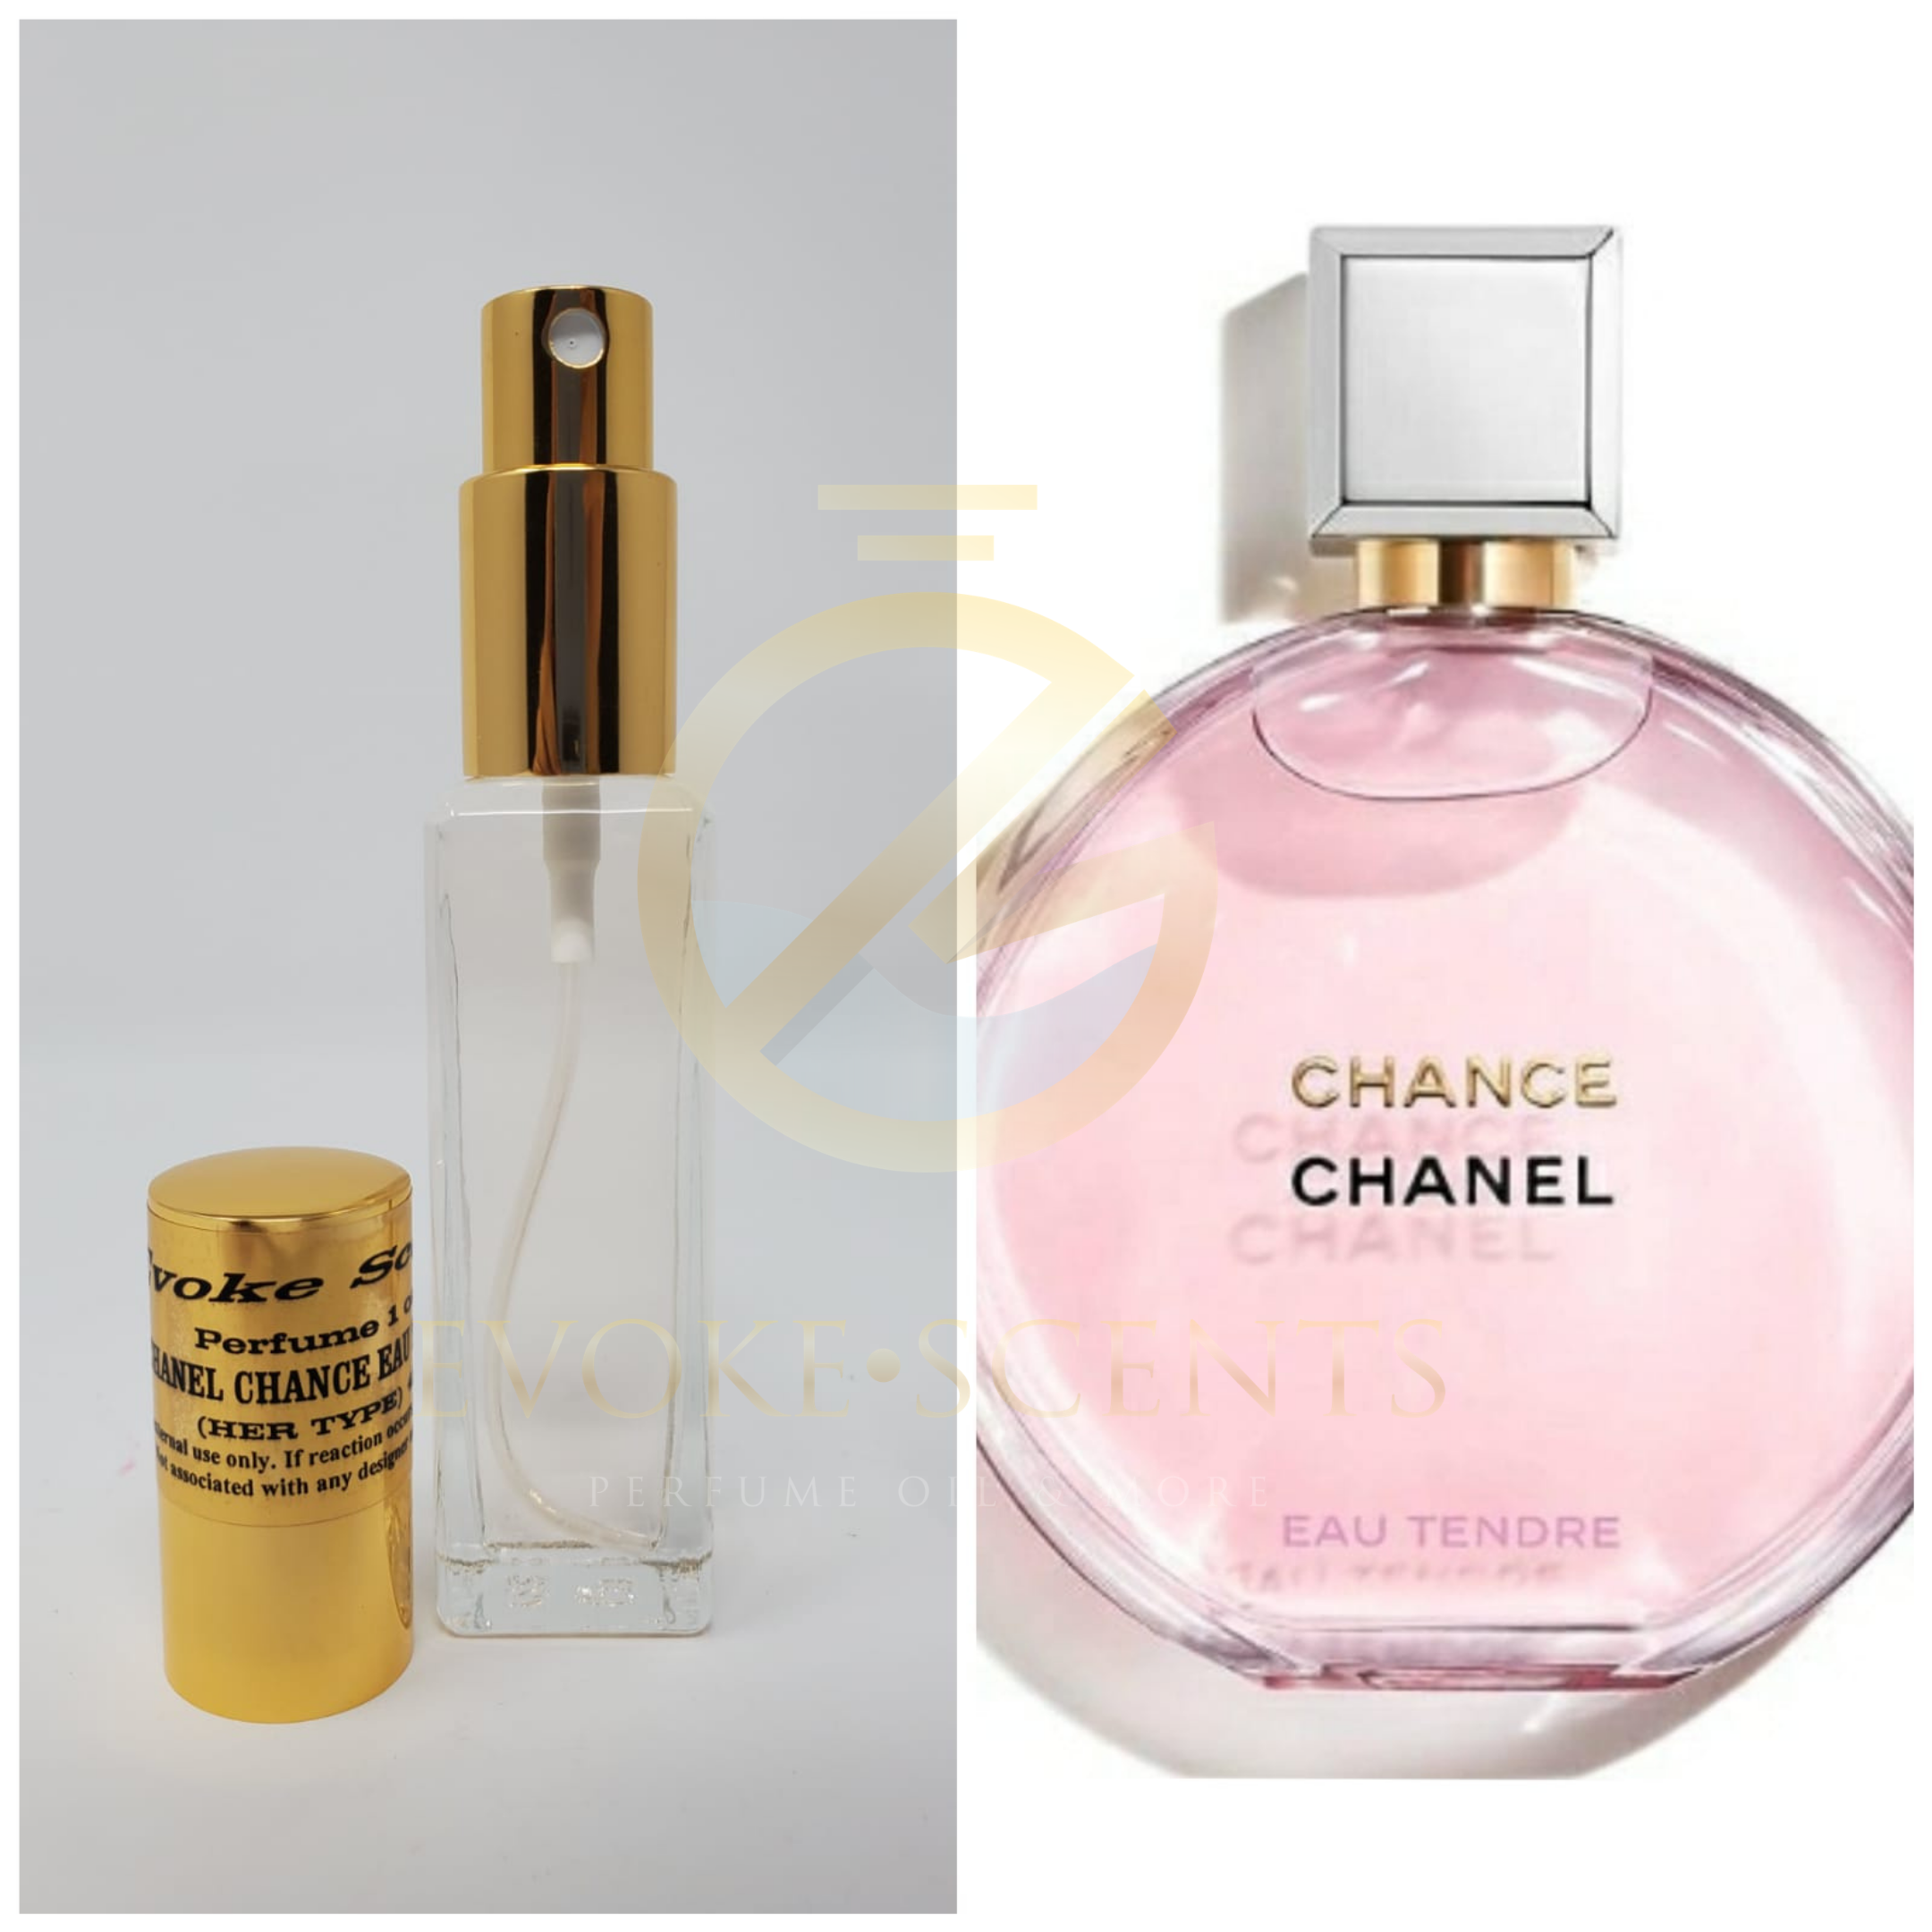 Chance Eau Tendre by Chanel